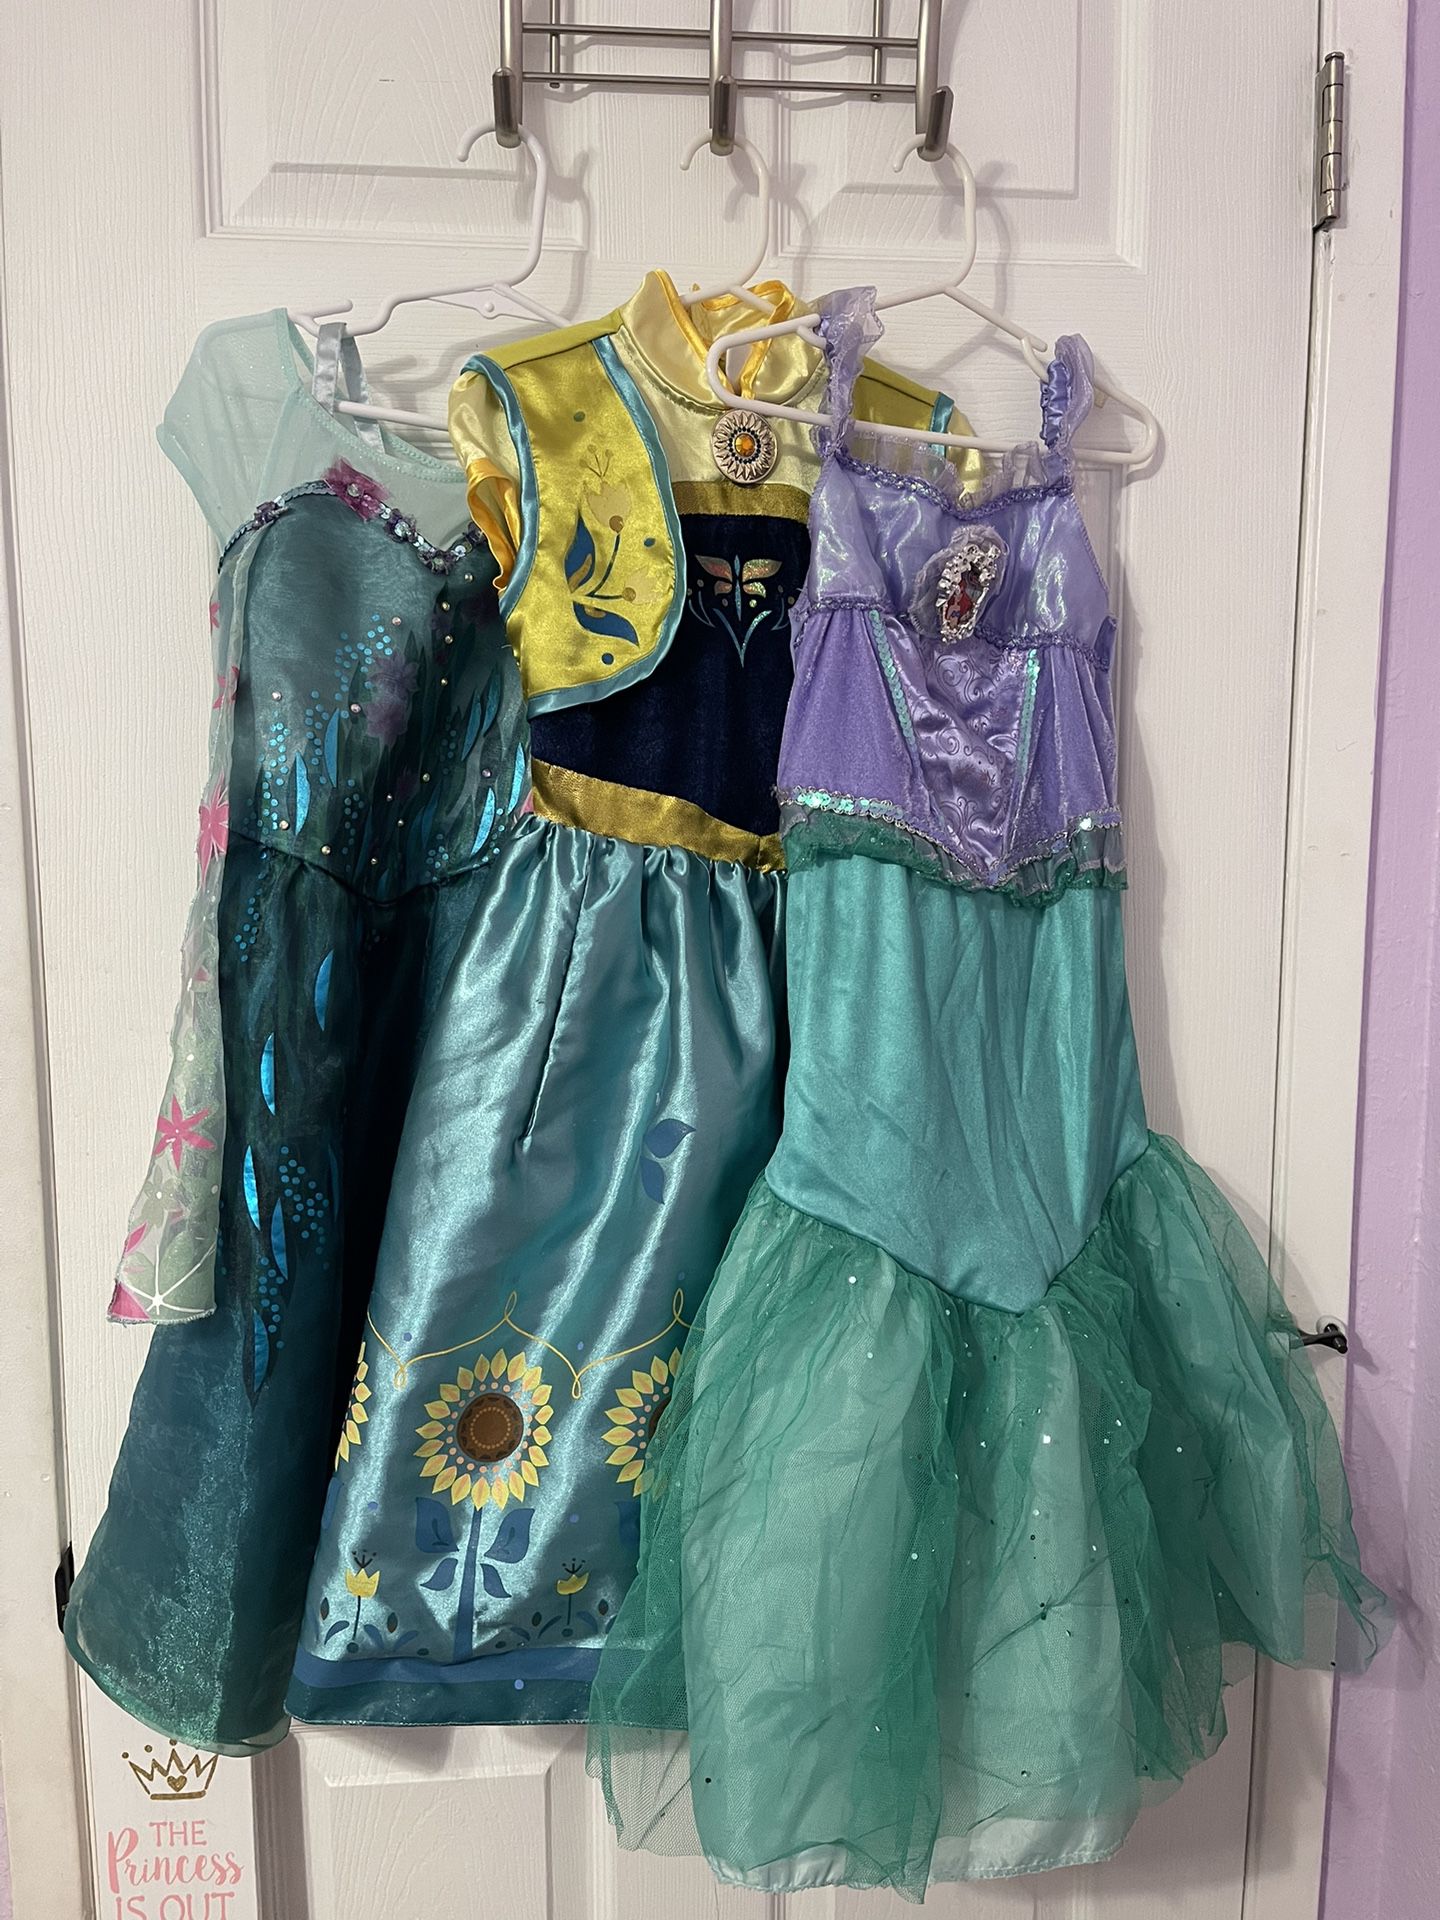 3 Disney Princess Dress Up Costumes. Size 4t. Elsa, Anna, Ariel